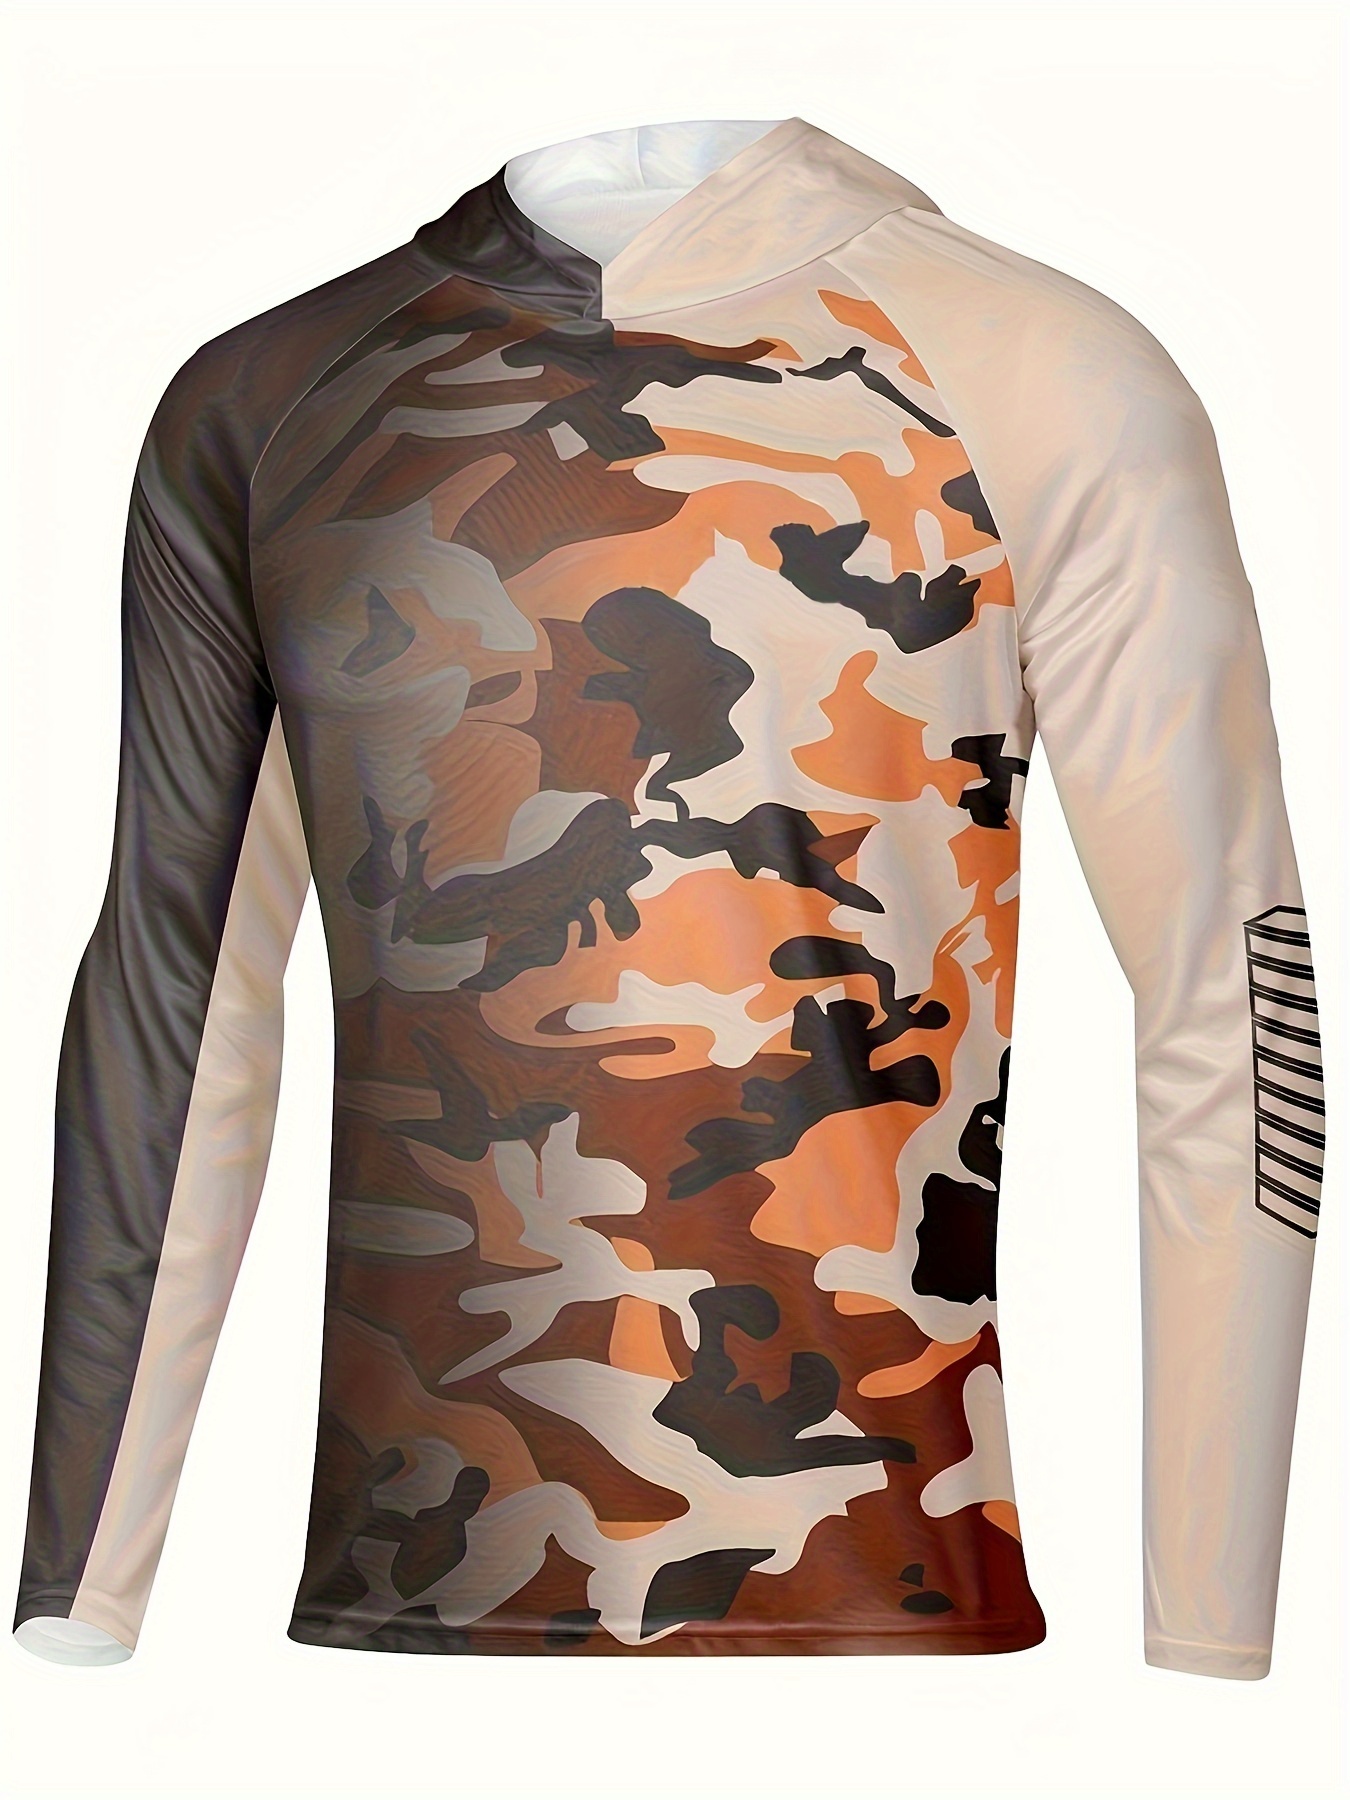 Men's Camouflage Raglan Sleeve Upf 50+ Sun Protection Hoodie, Long Sleeve Comfy Quick Dry Tops For Men's Outdoor Fishing Activities